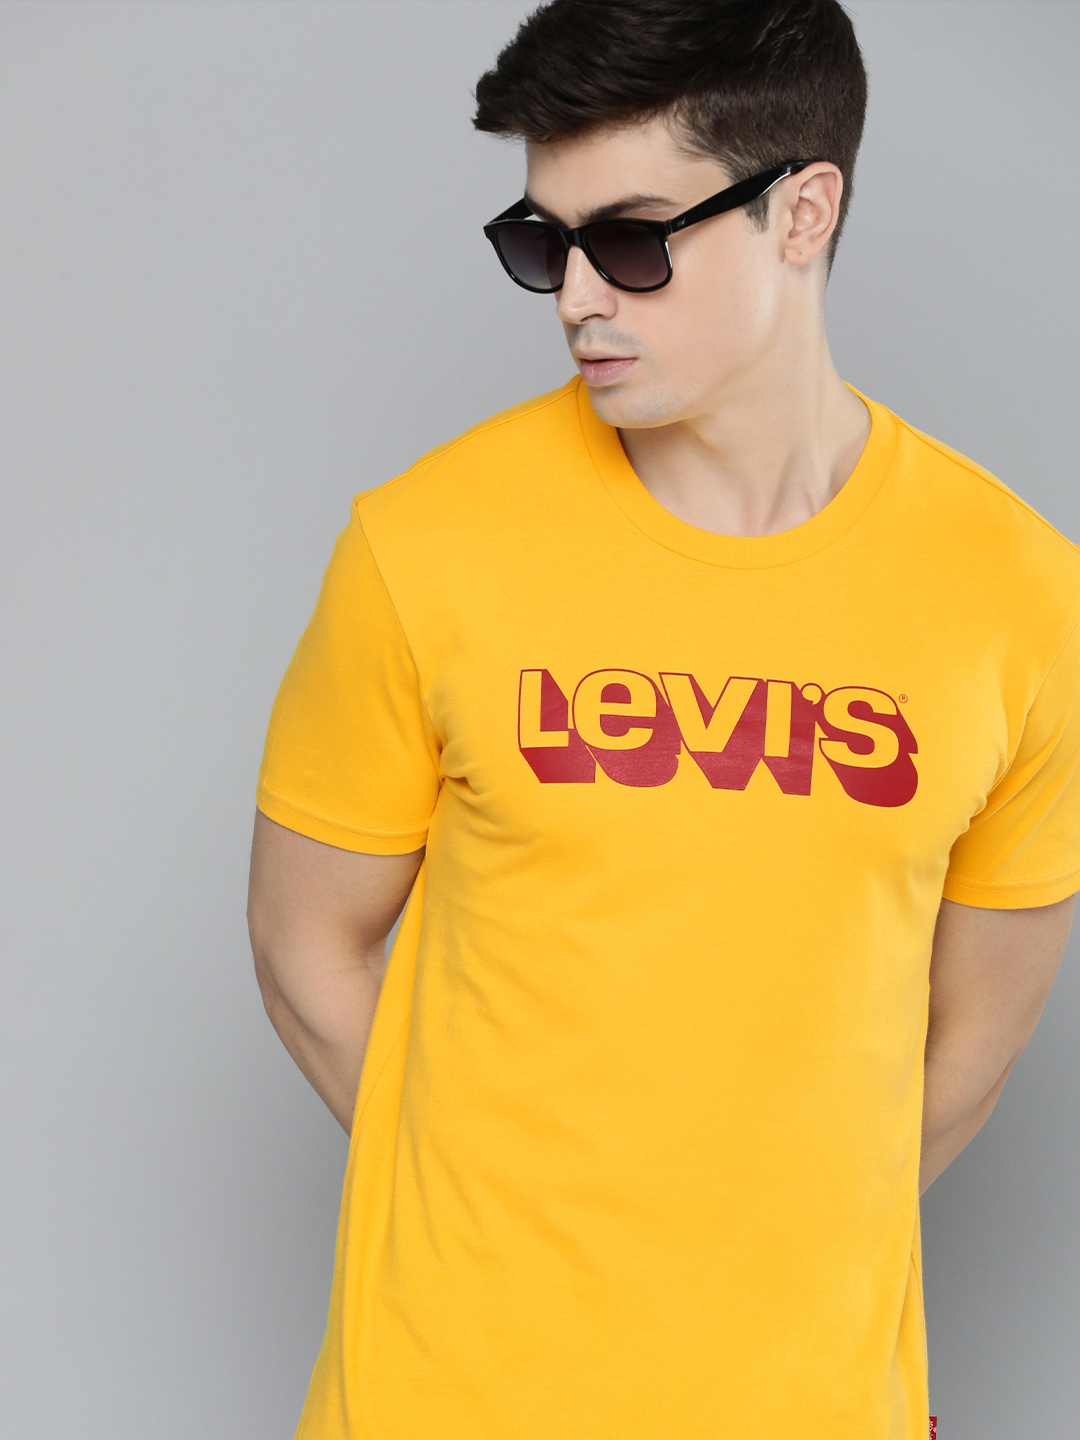 Buy Levis Brand Logo Printed Pure Cotton T Shirt - Tshirts for Men ...